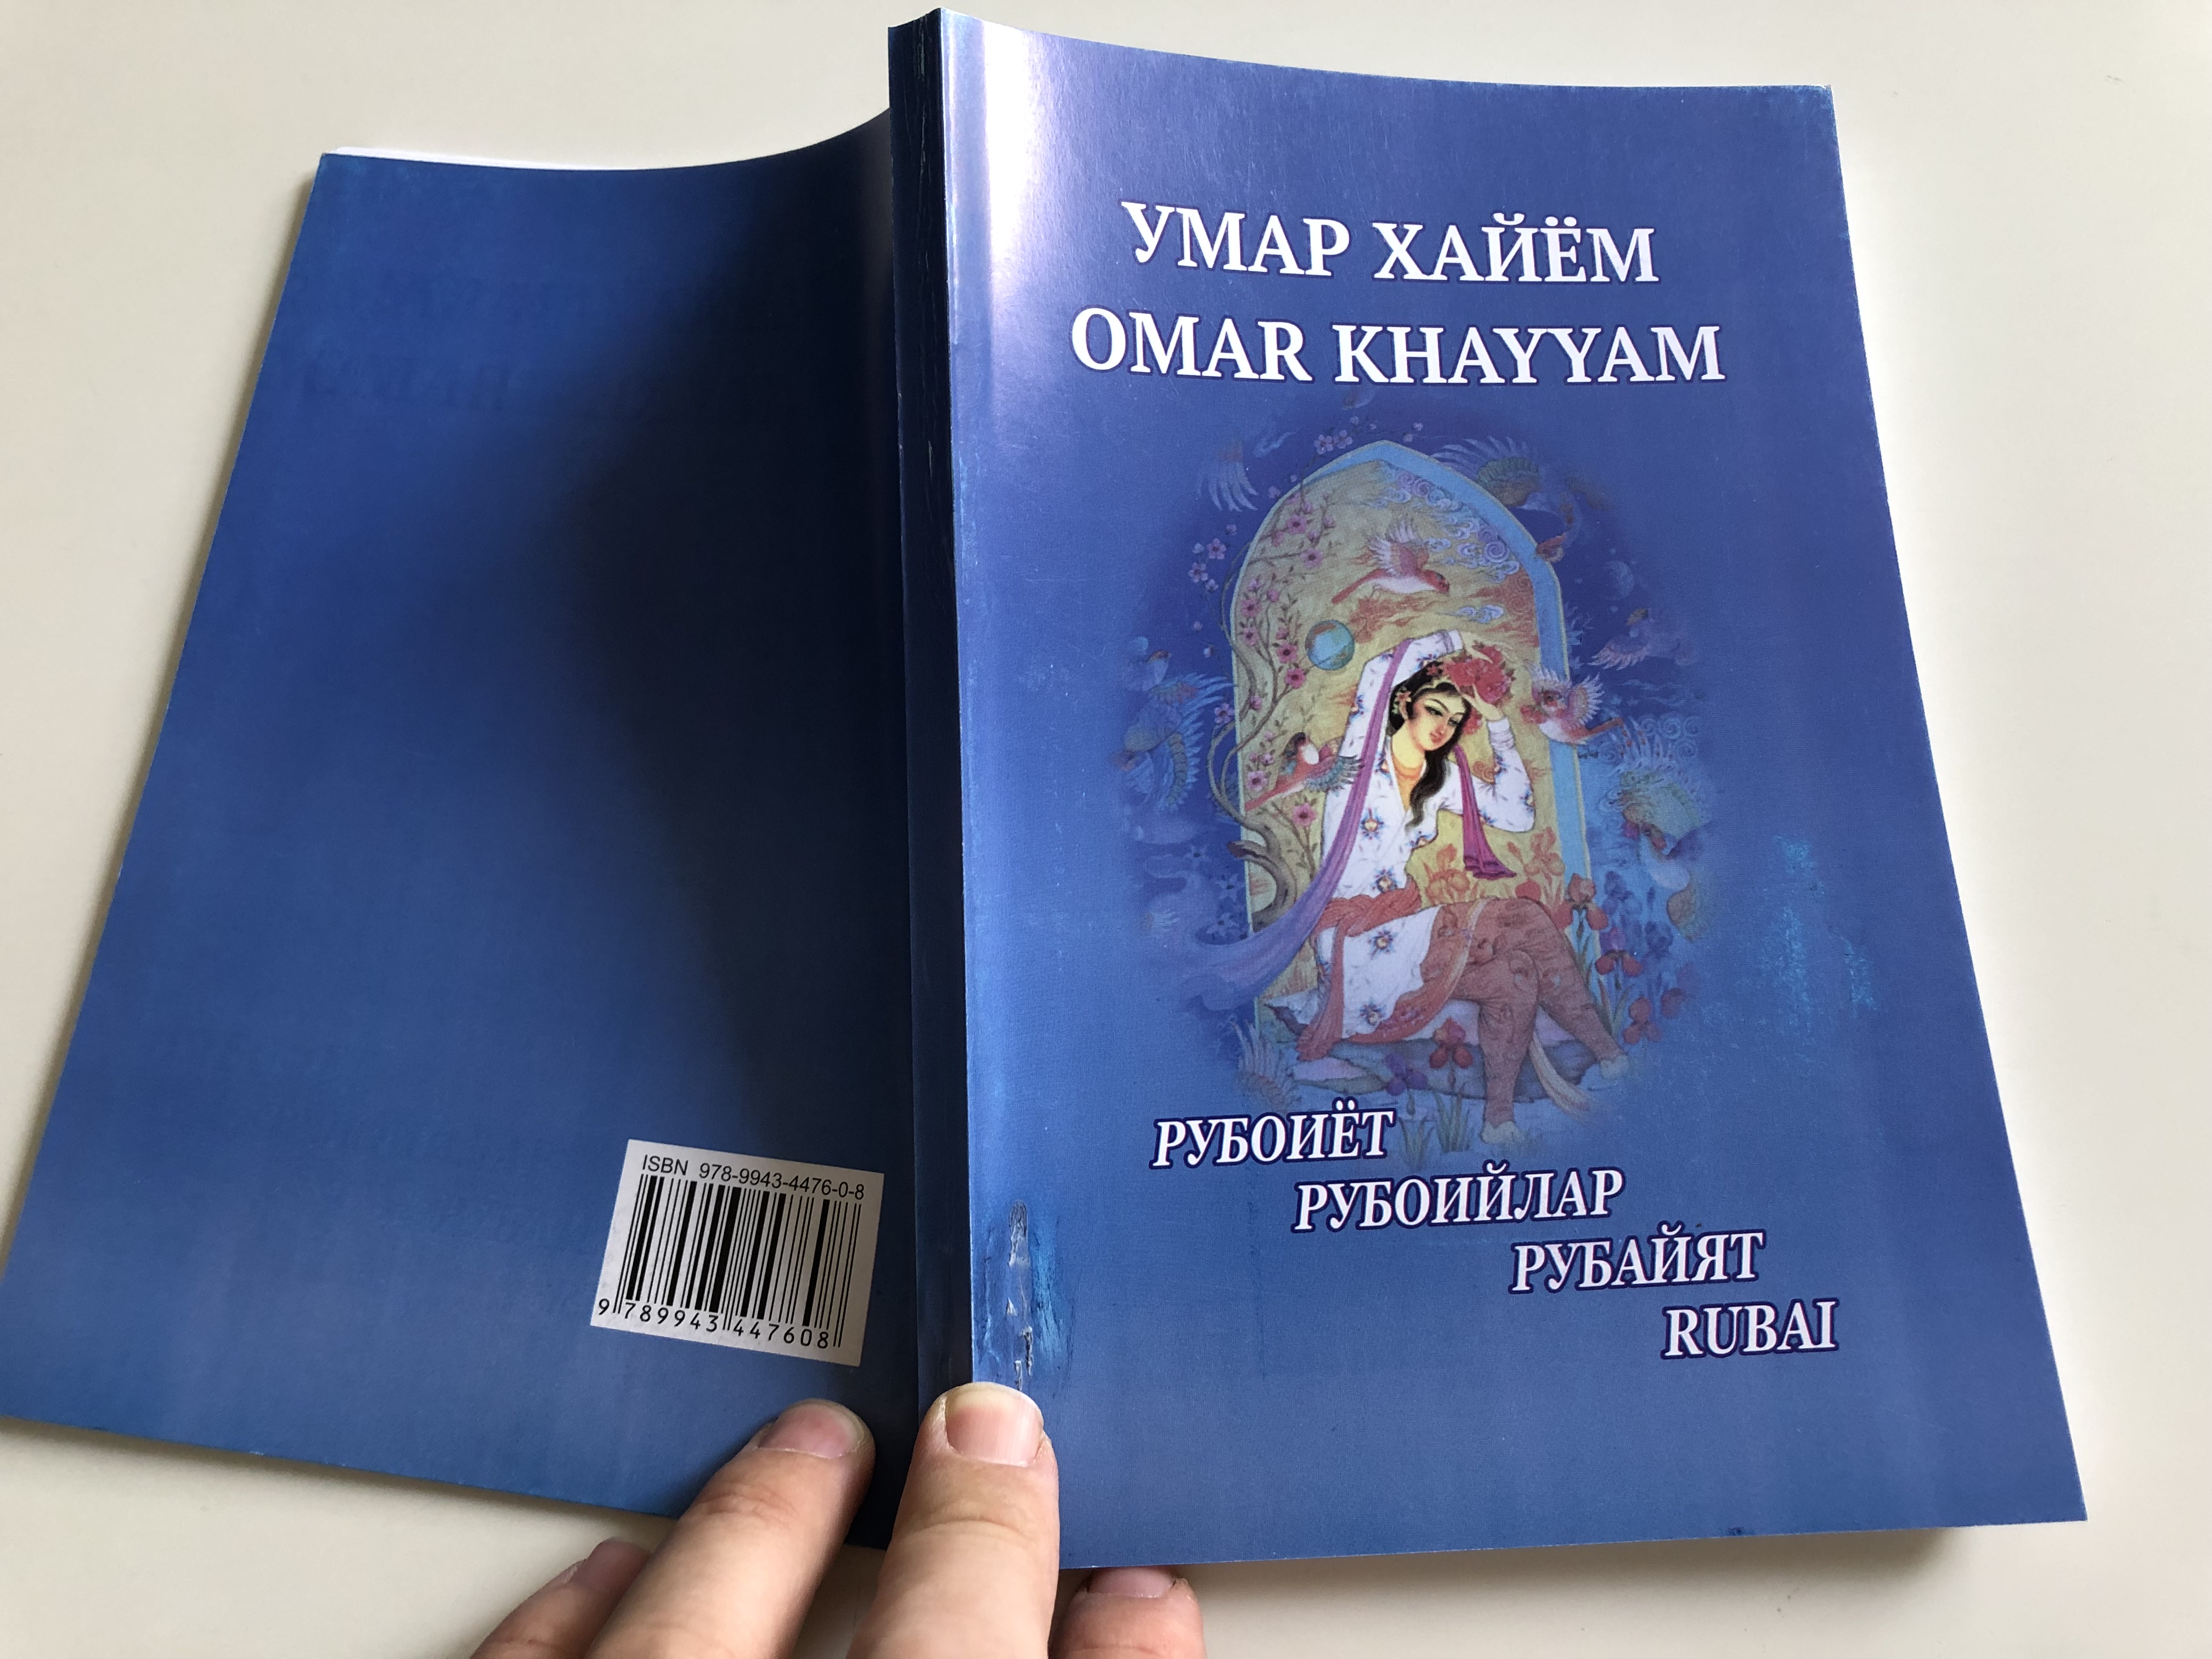 -rubai-by-omar-khayyam-tajik-uzbek-russian-and-english-language-christian-poetry-book-turon-zamin-ziyo-2017-15-.jpg